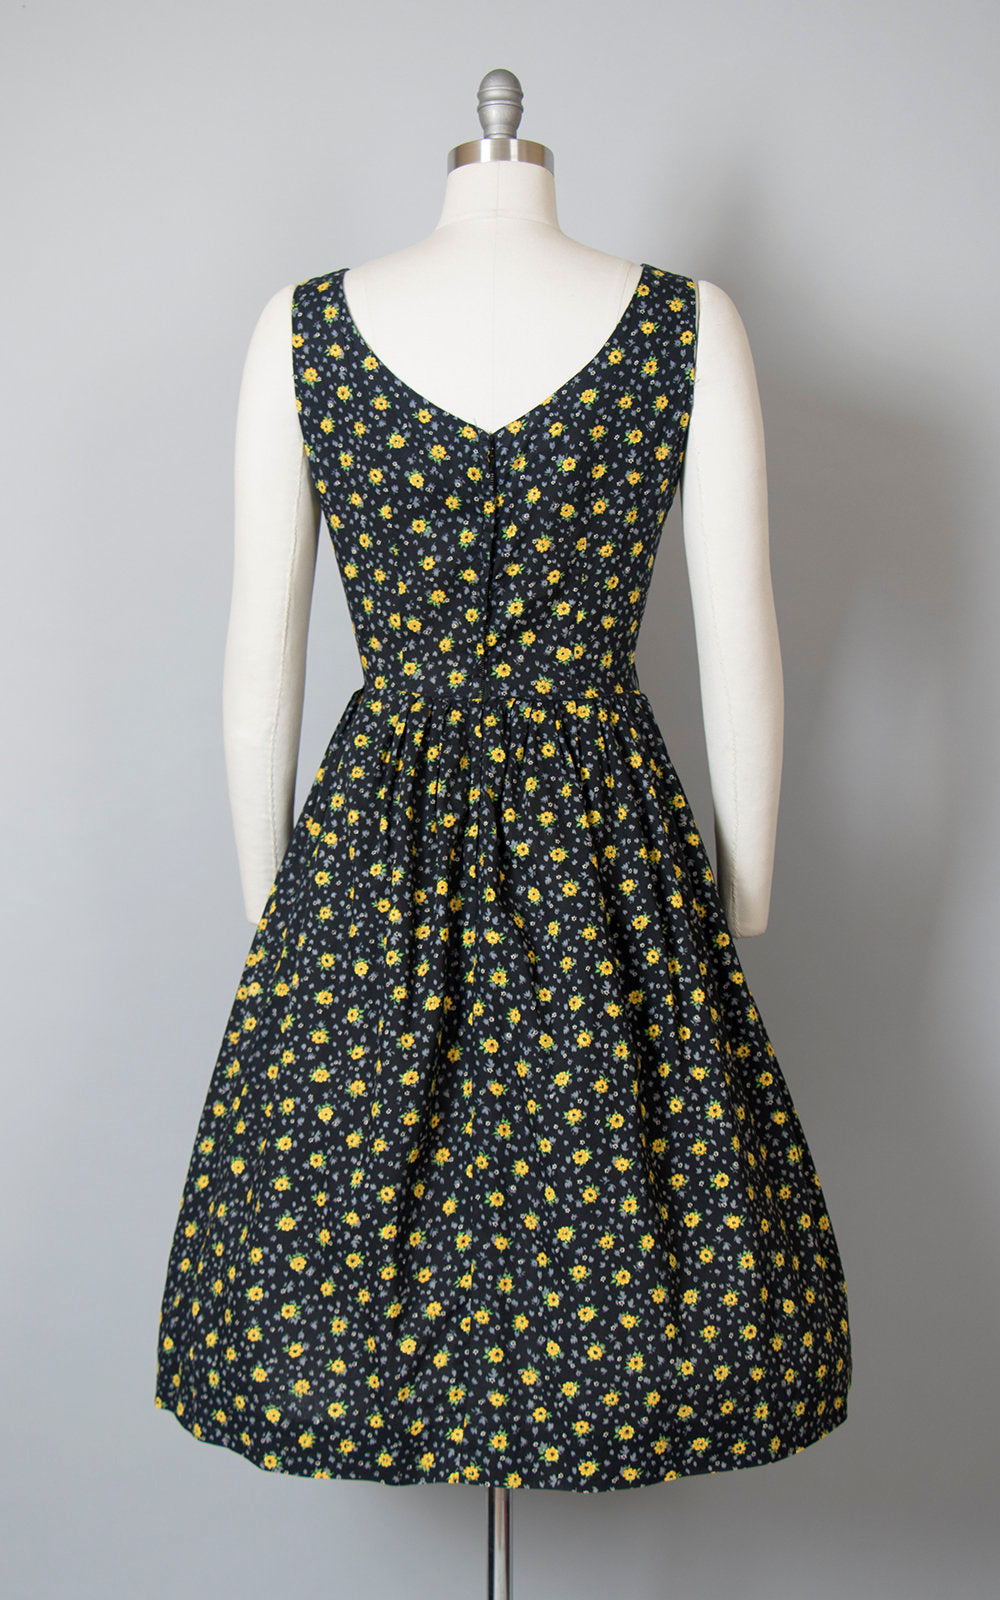 Vintage 1950s Dress | 50s Black Floral Cotton Sun Dress Full Skirt Sundress (medium/large)